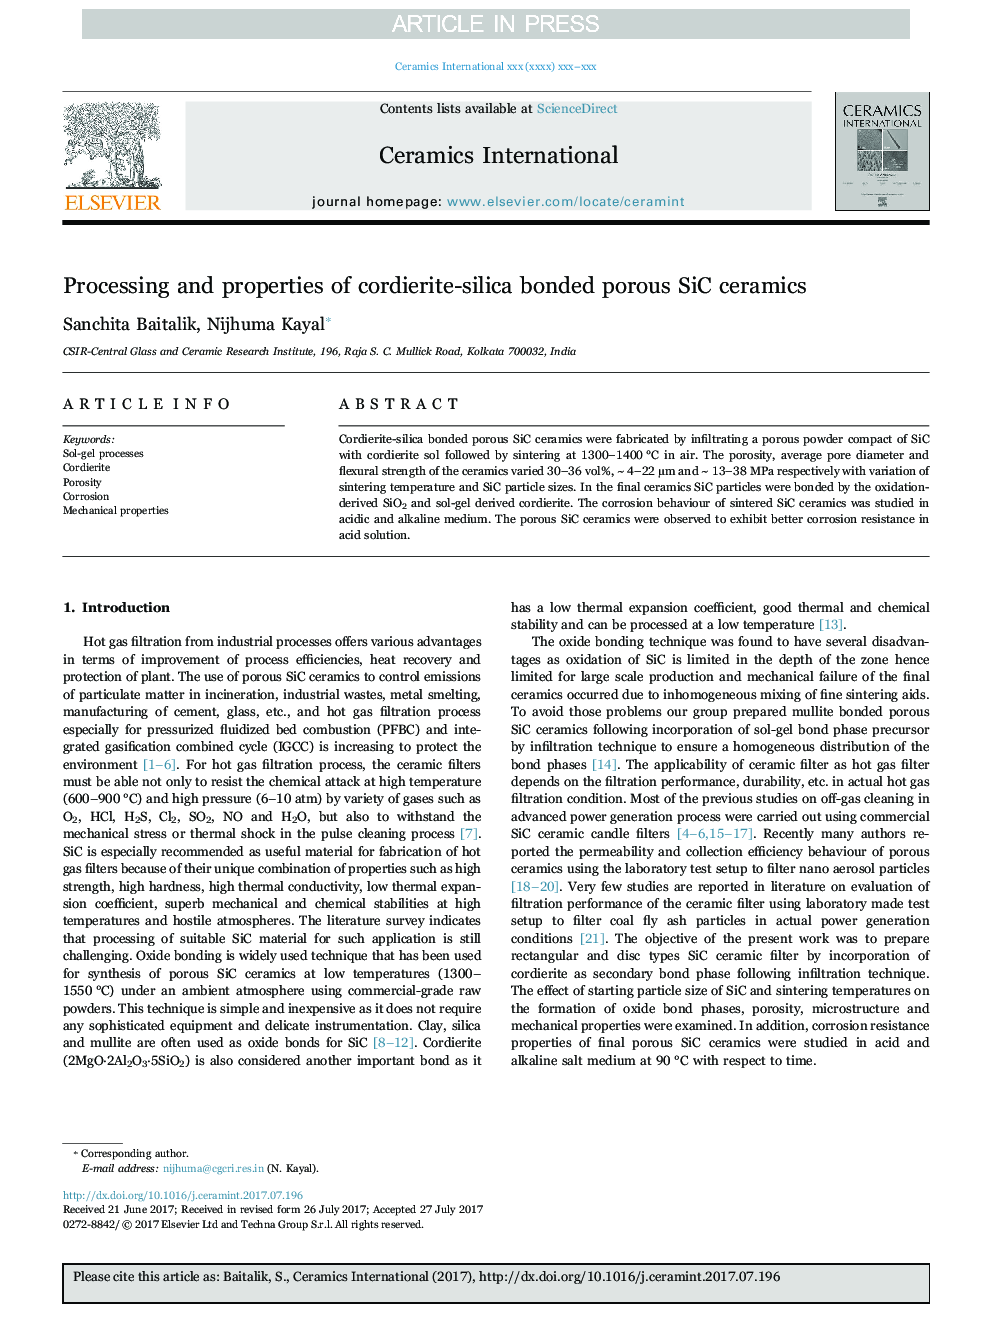 Processing and properties of cordierite-silica bonded porous SiC ceramics